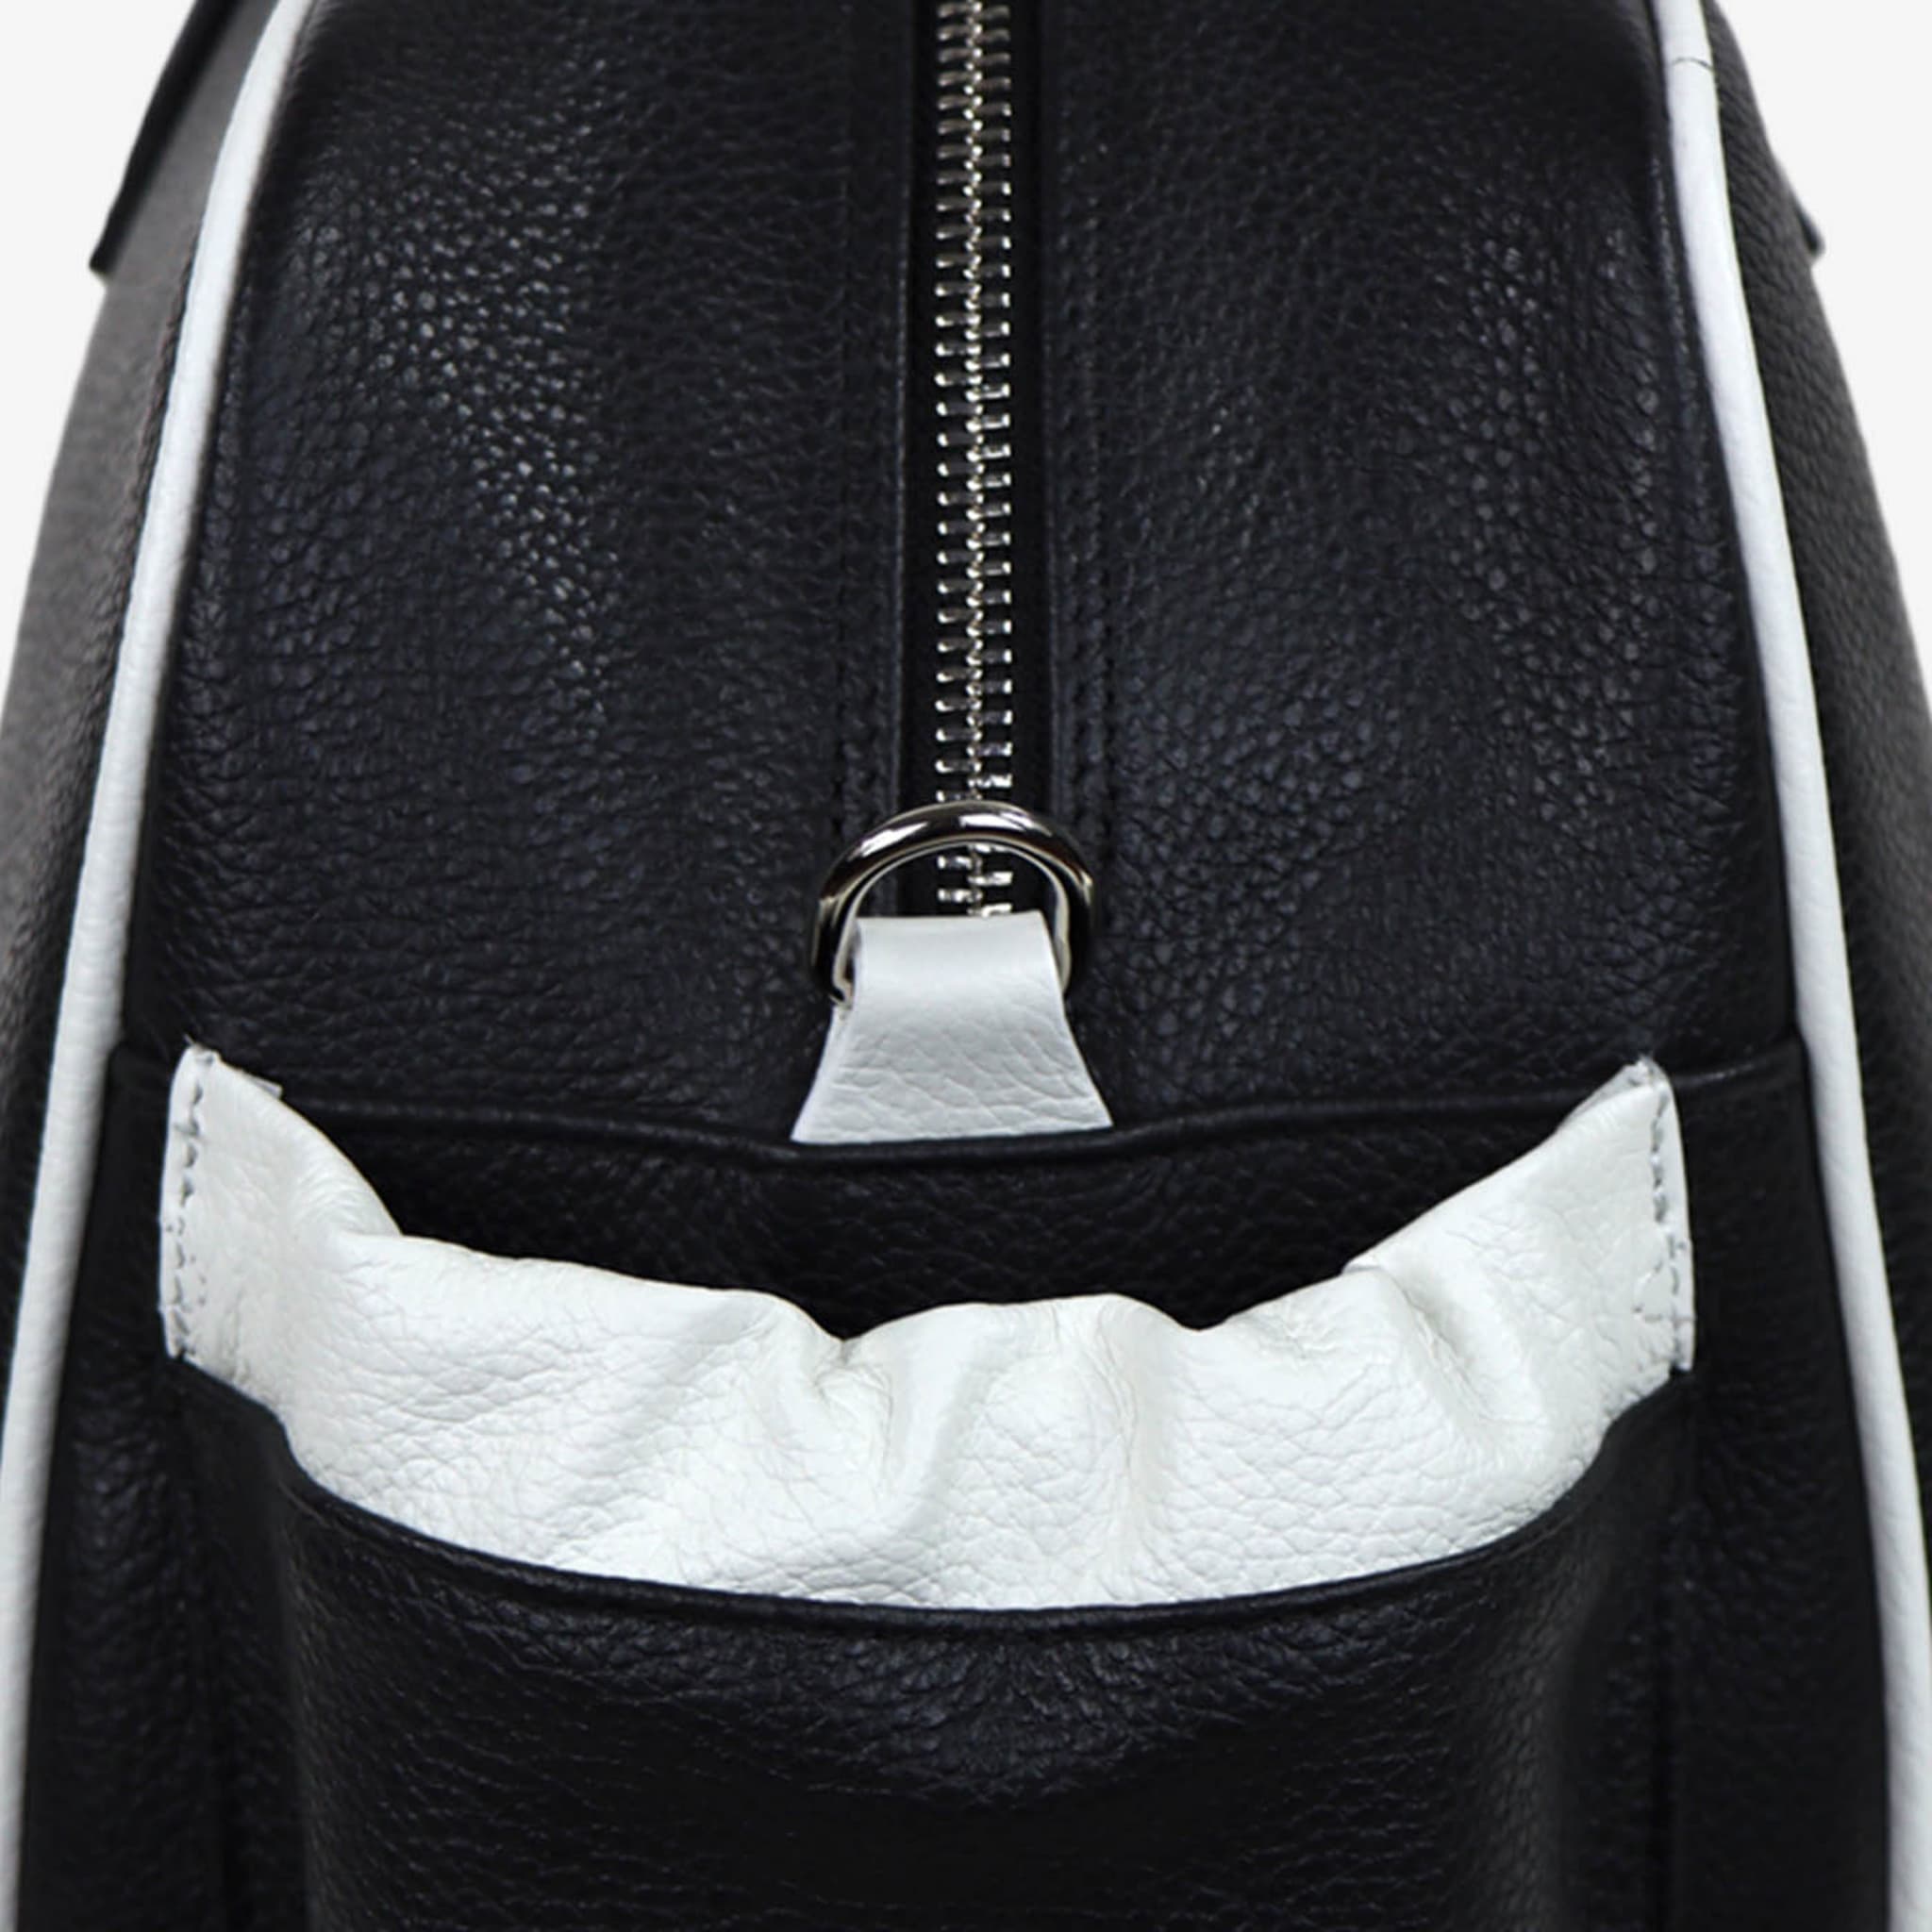 Sport Black & White Bag with Tennis-Racket-Shaped Pocket - Alternative view 1